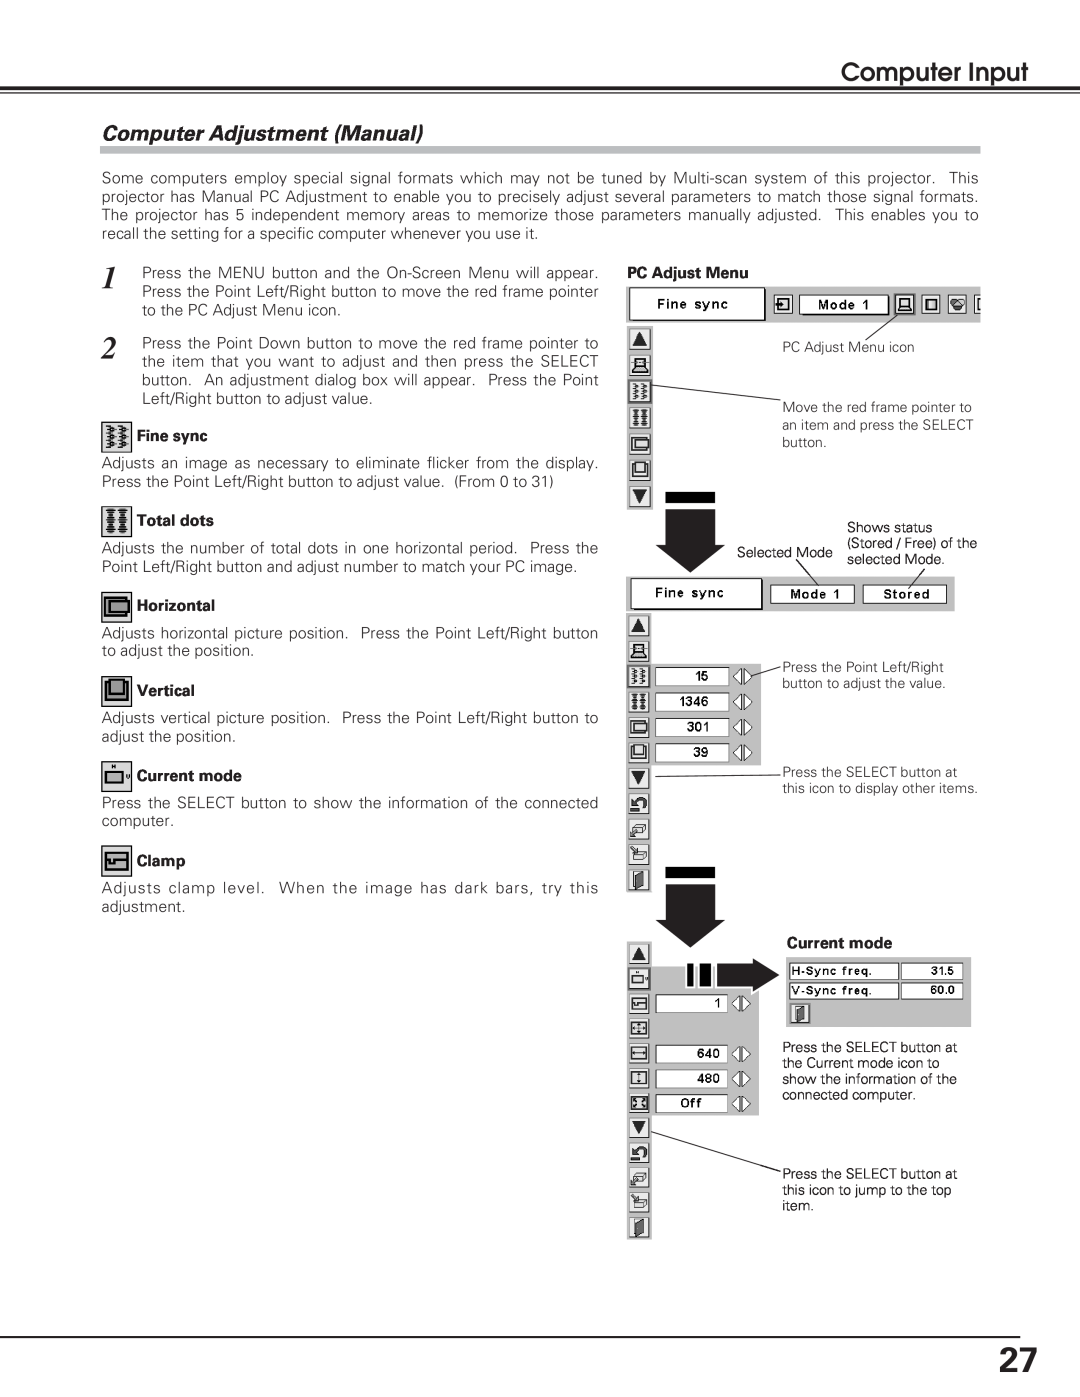 Eiki LC-SB20 Computer Adjustment Manual, Computer Input, Fine sync, Total dots, Horizontal, Vertical, Current mode, Clamp 